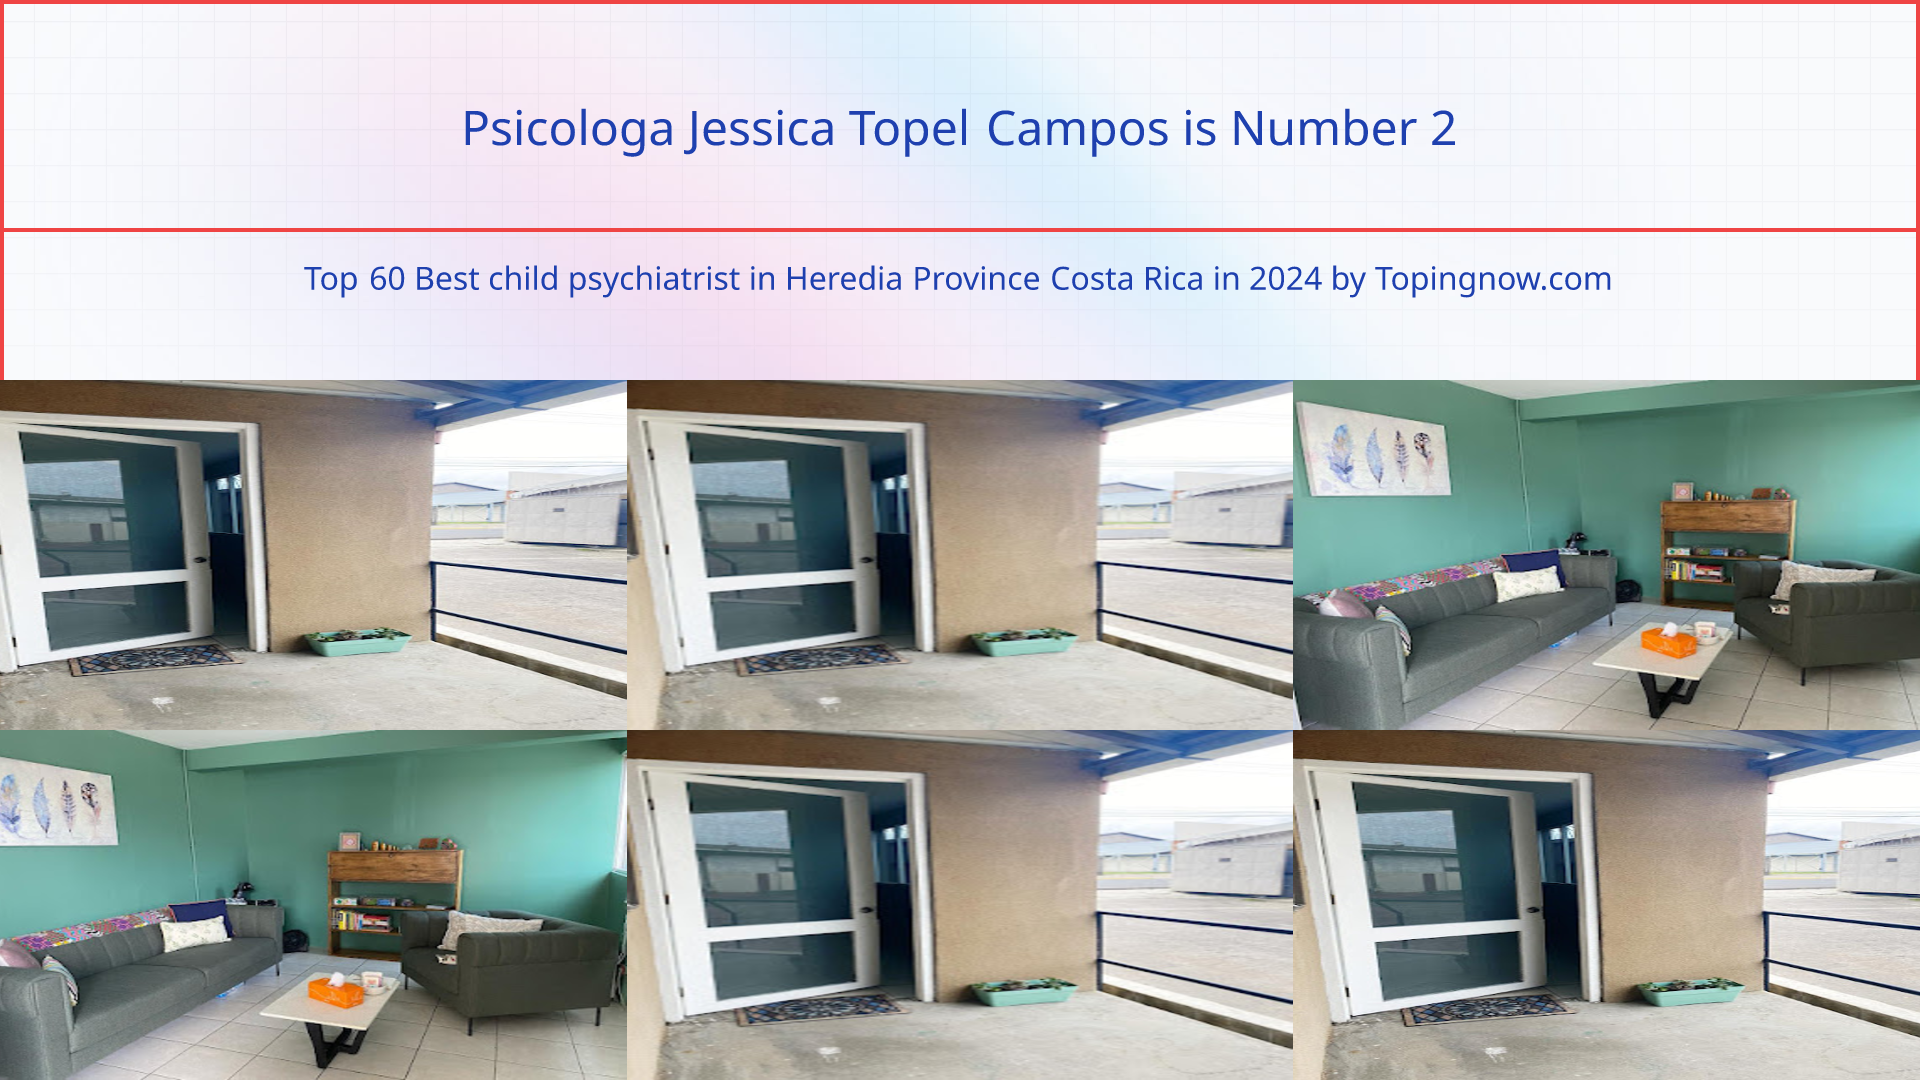 Psicologa Jessica Topel Campos: Top 60 Best child psychiatrist in Heredia Province Costa Rica in 2024